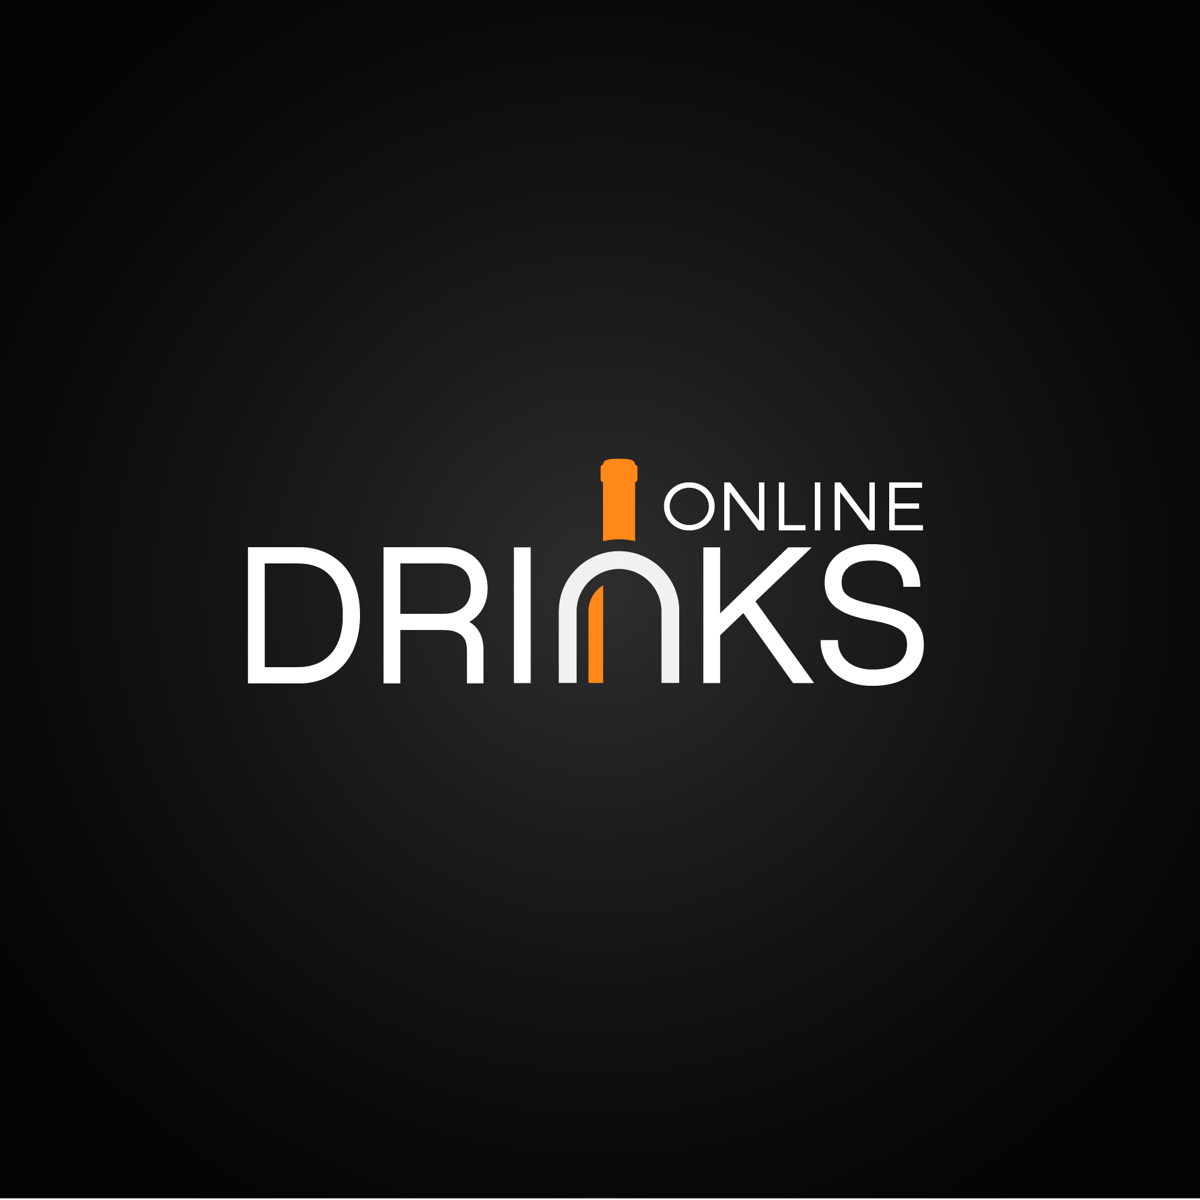 drinks online logo 2 bg.png